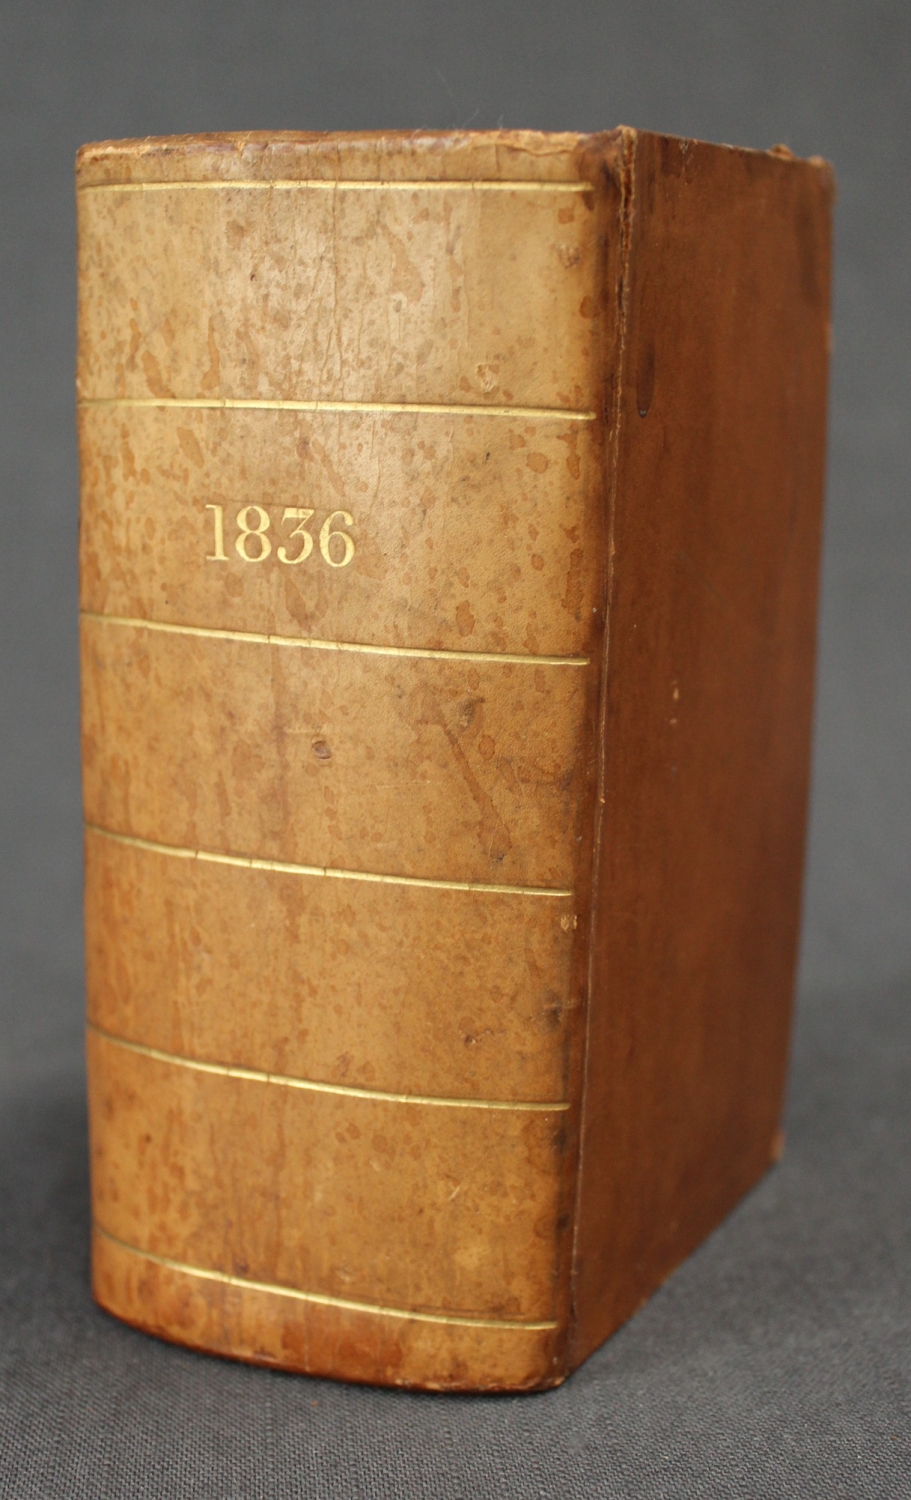 The Edinburgh Almanac for 1836